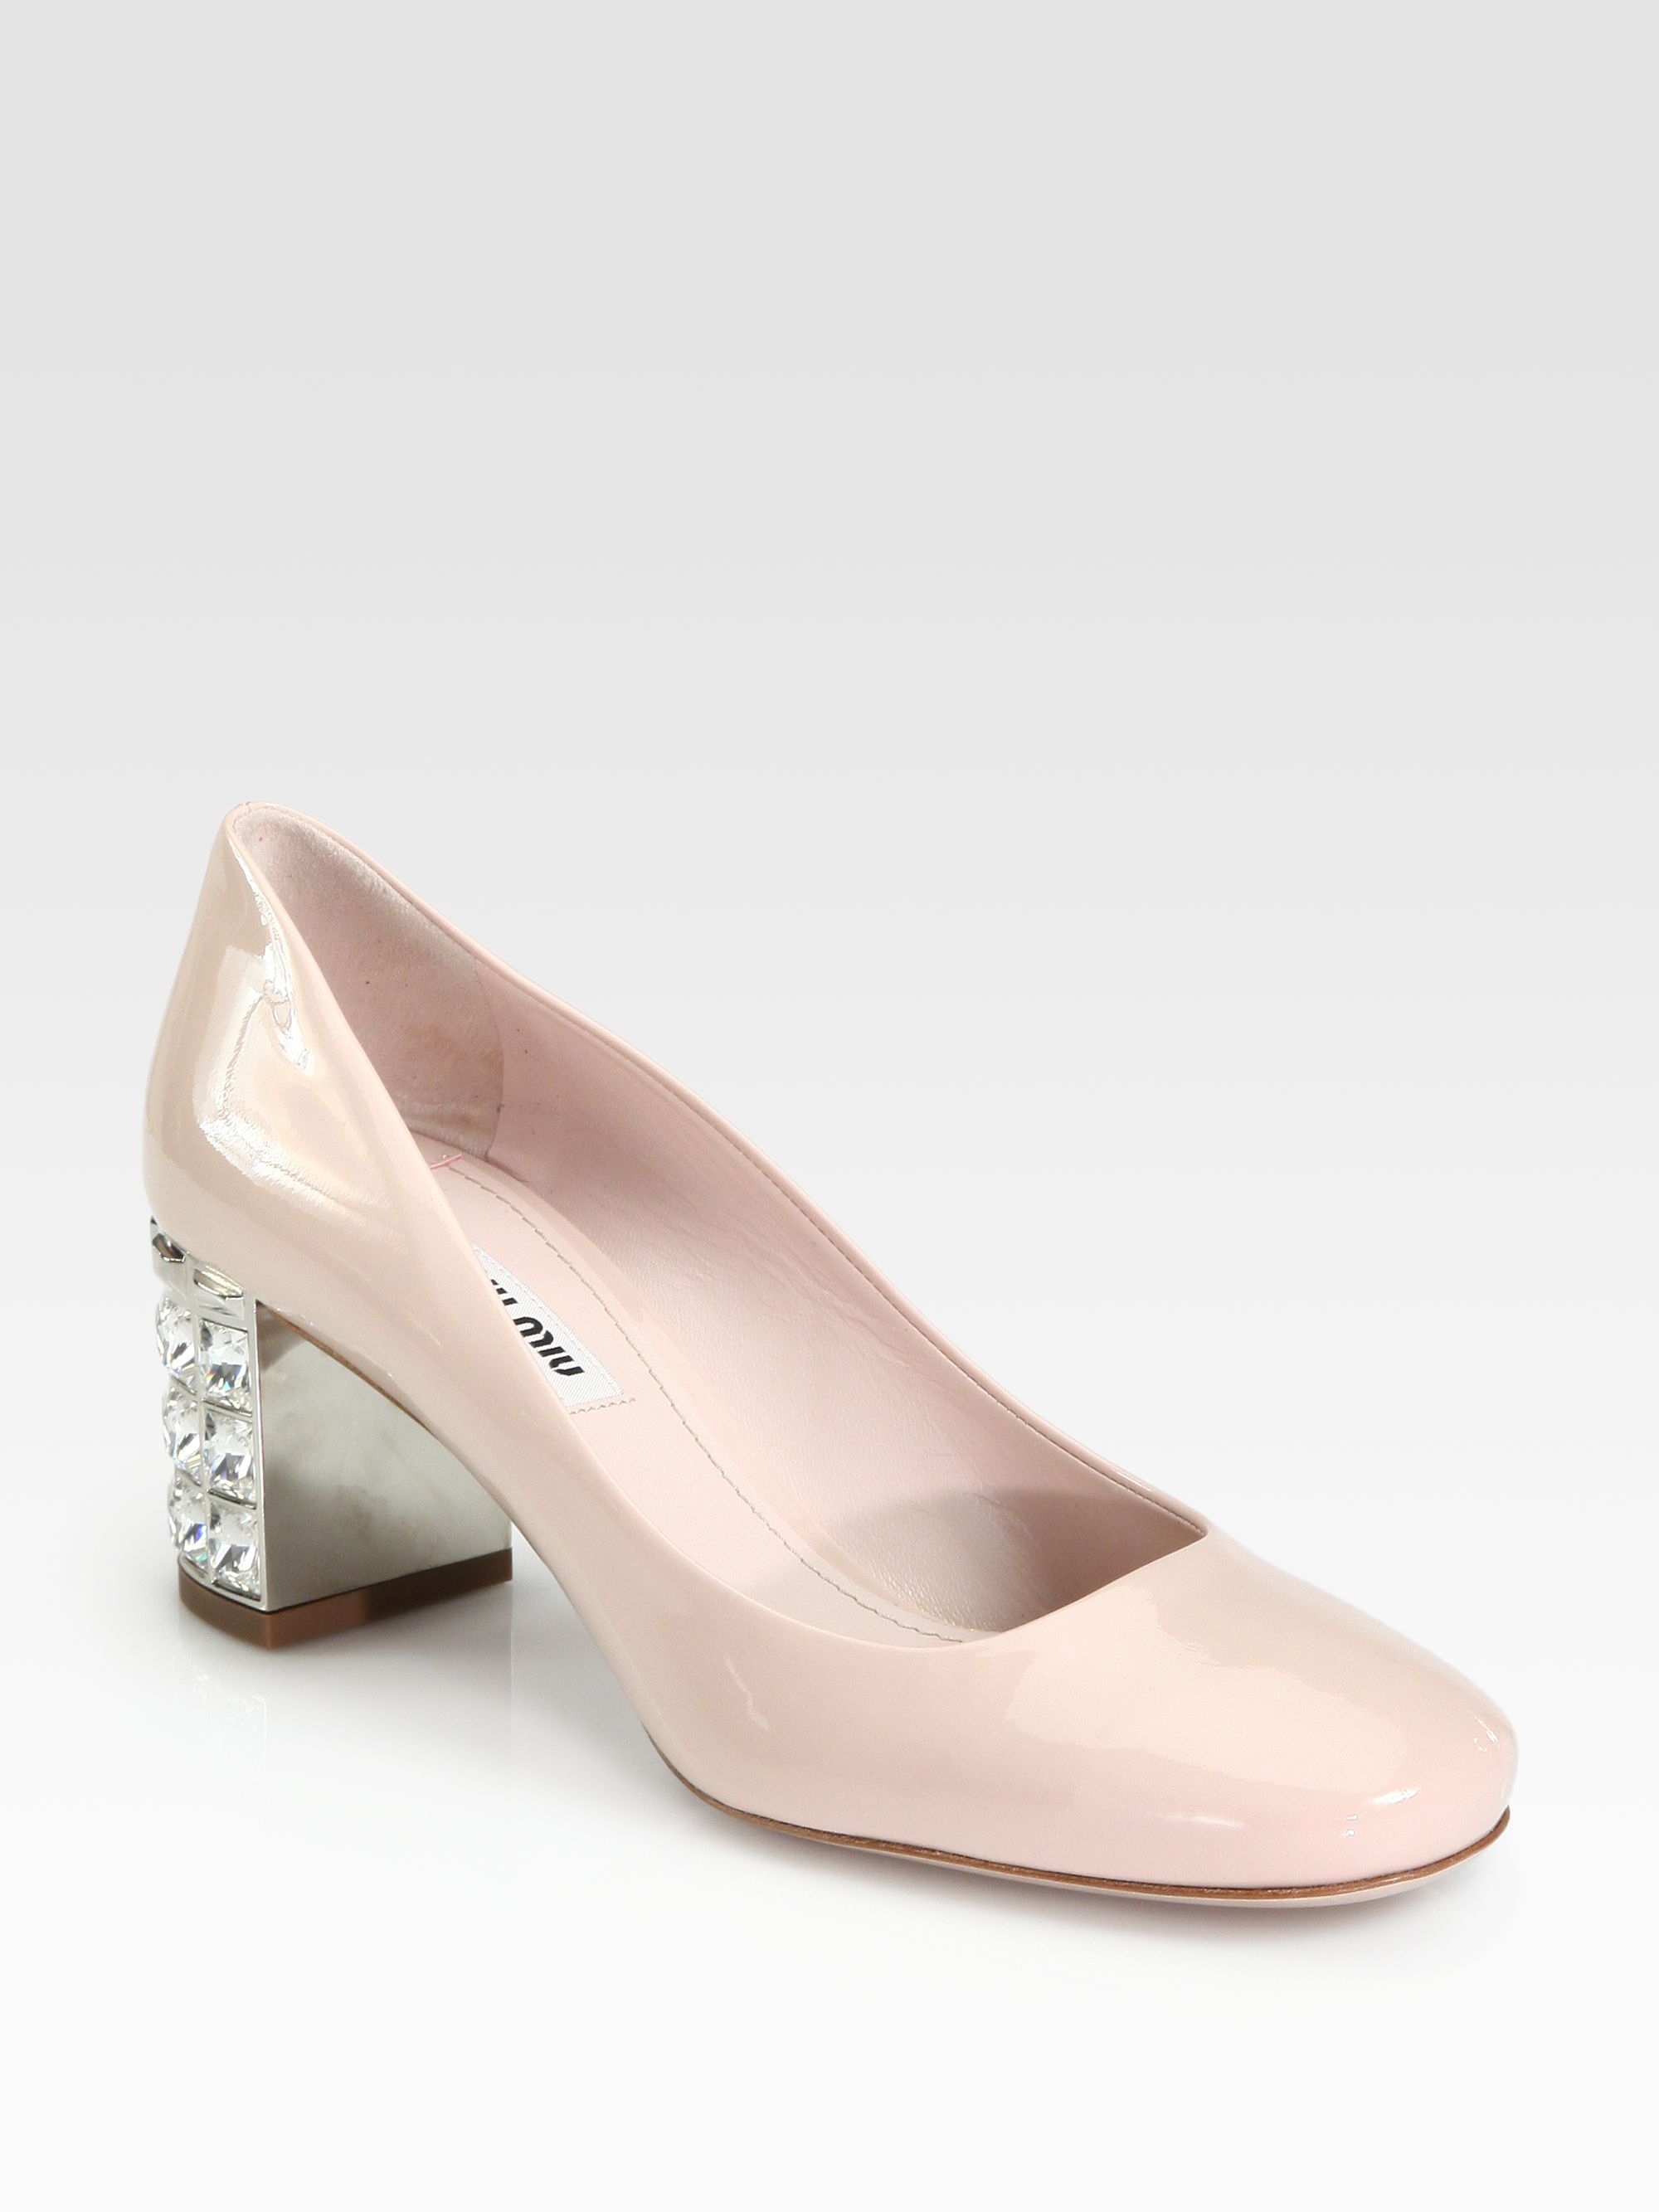 Miu Miu Patent Leather Crystal Heel Pumps in Blush (Pink) - Lyst